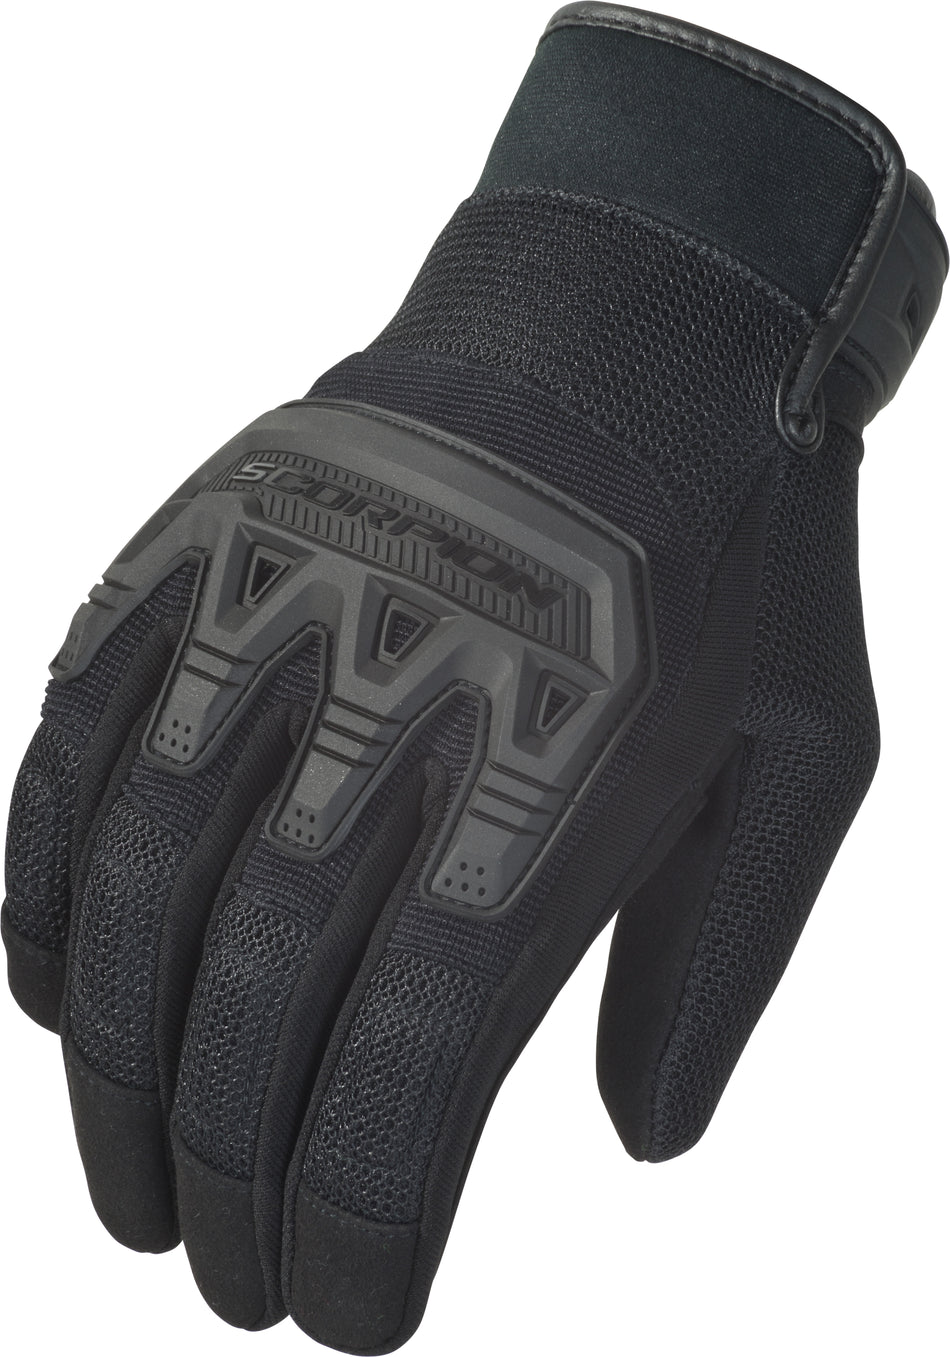 SCORPION EXO Covert Tactical Gloves Black Sm G32-033